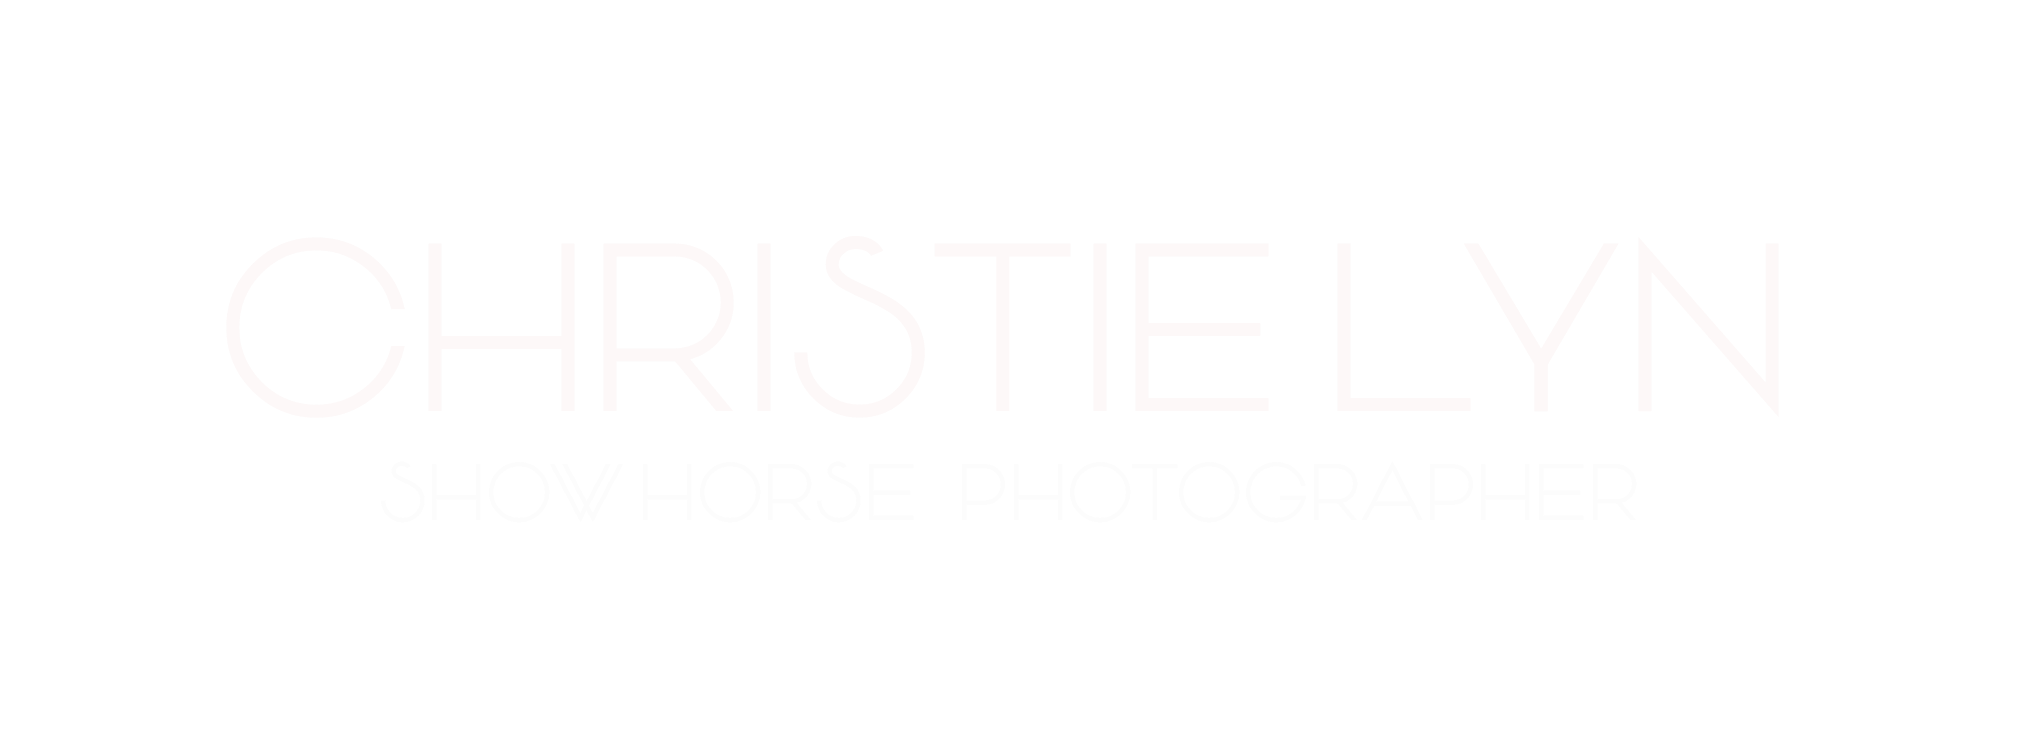 Christie Lyn Photography logo